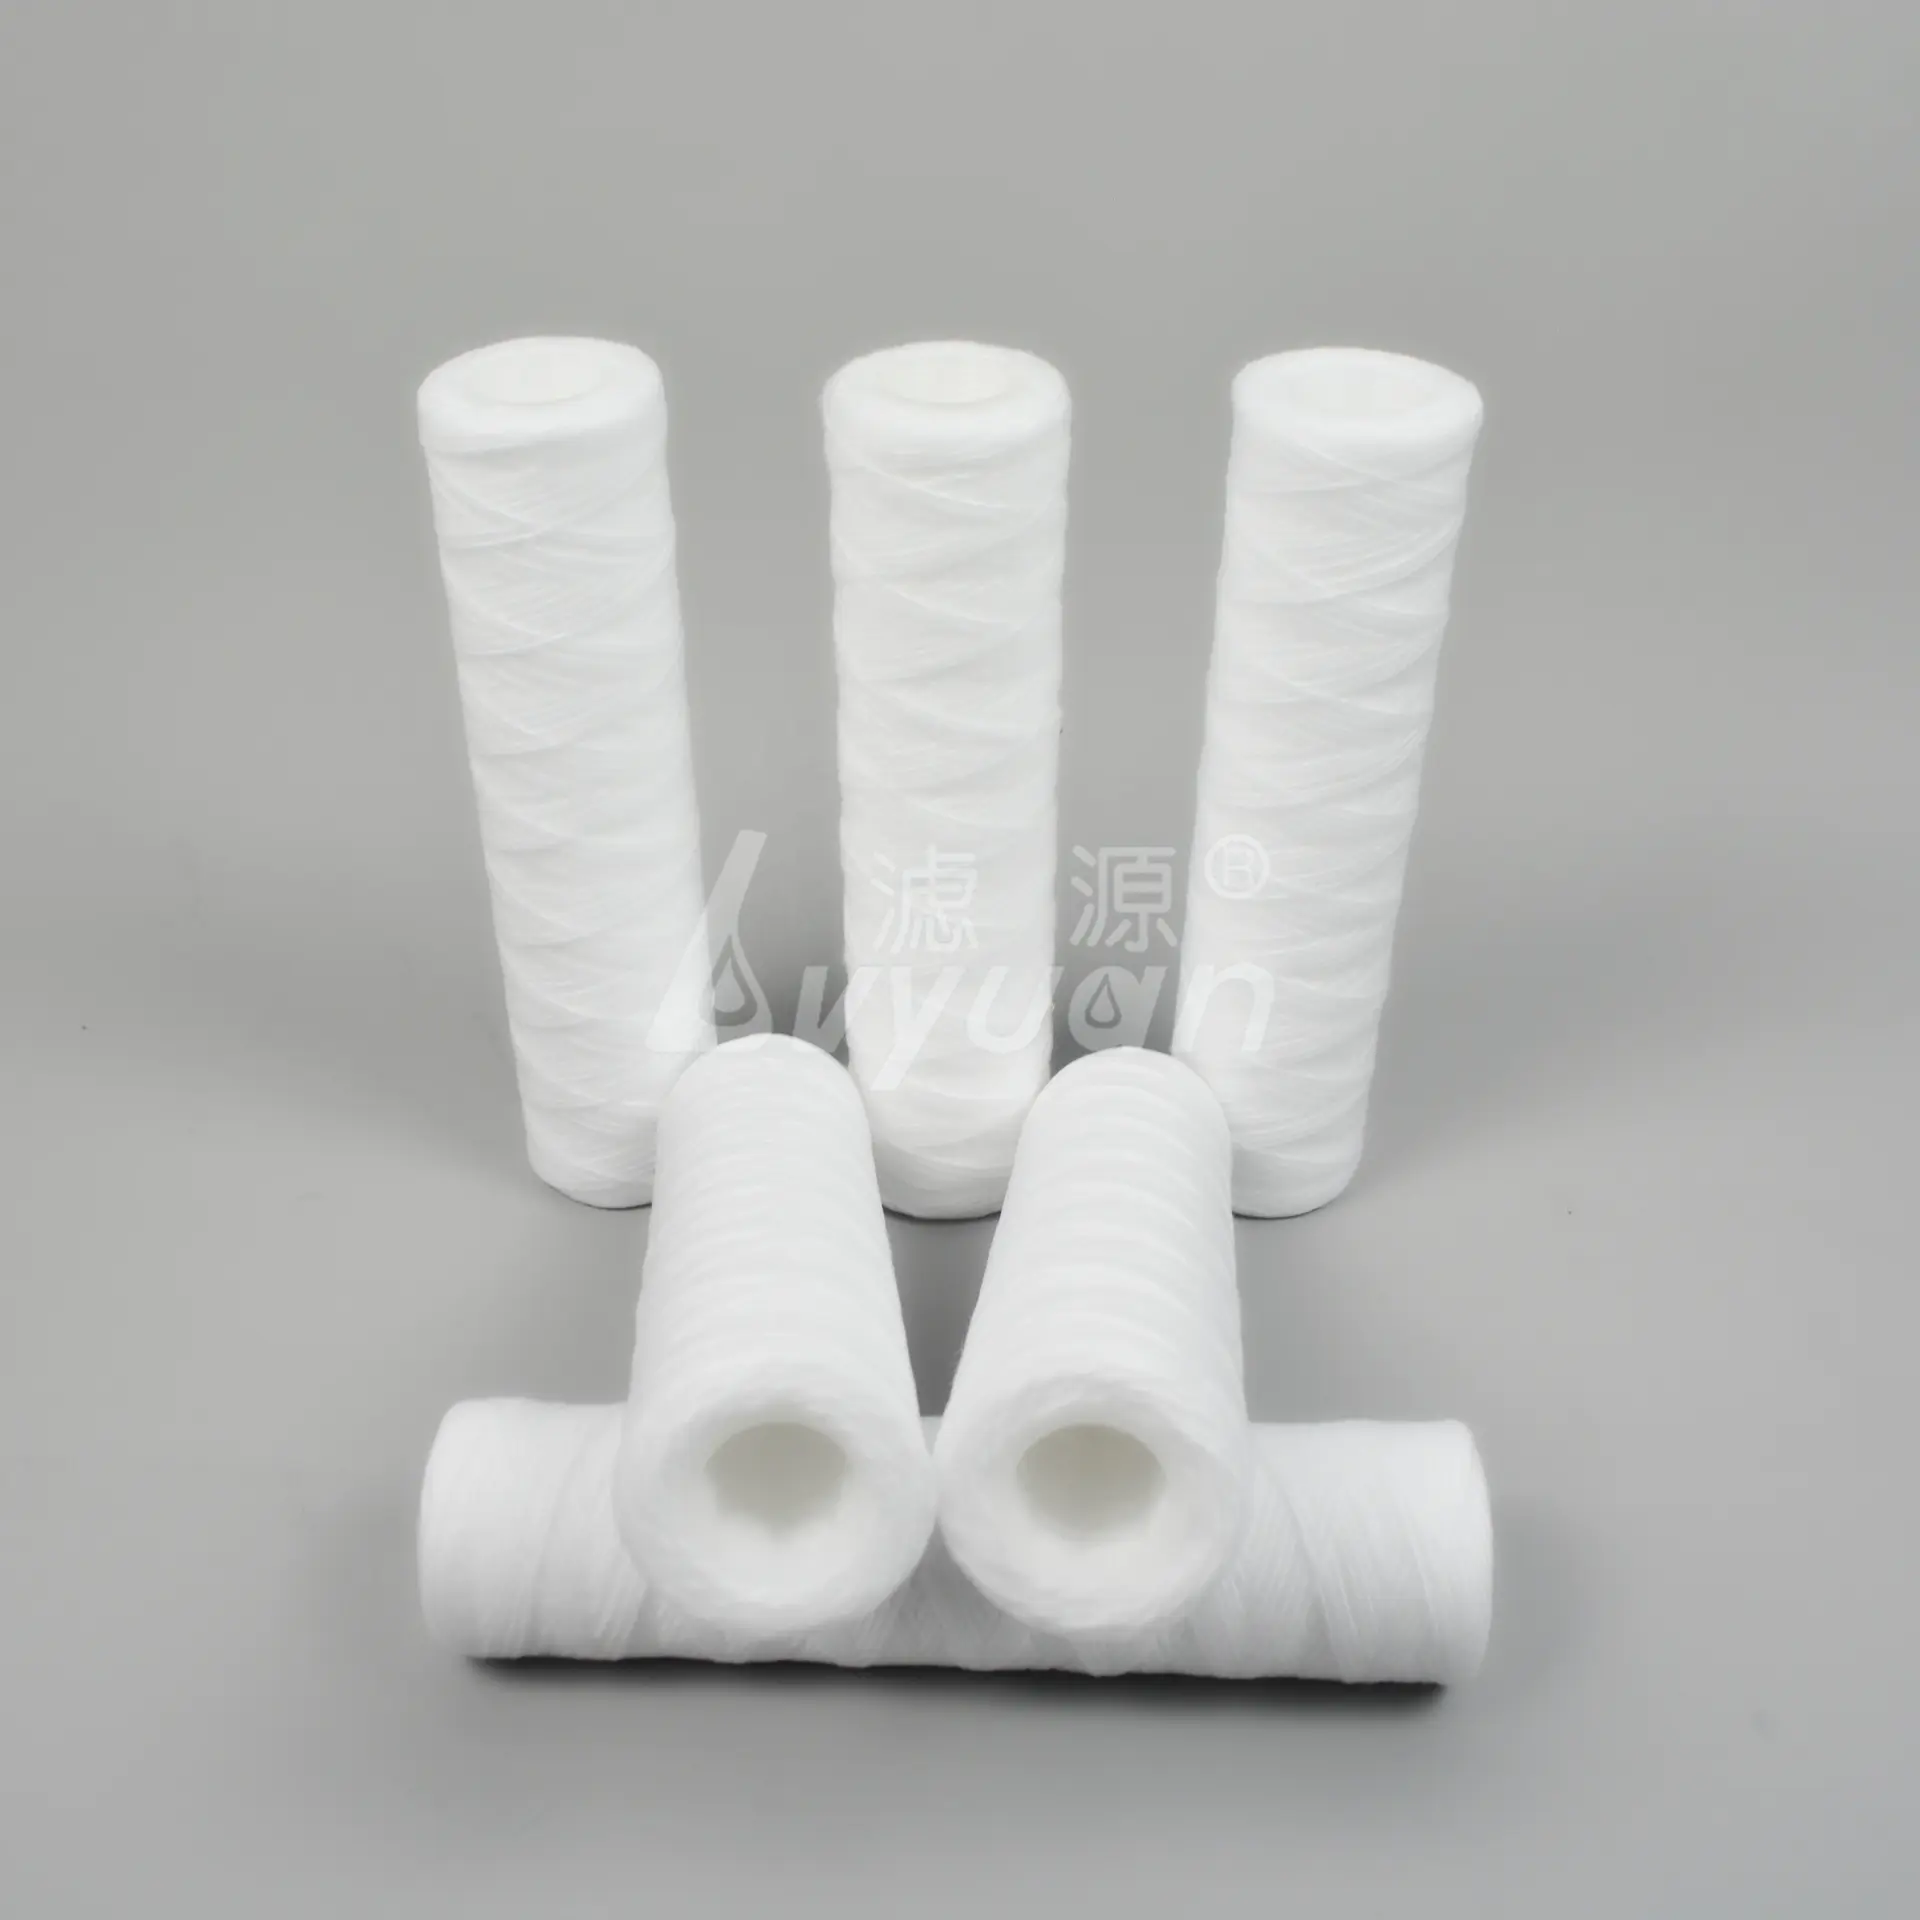 10 inch pp sediment spun String wound filter cartridge fiberglass/cotton Filter for water filtration